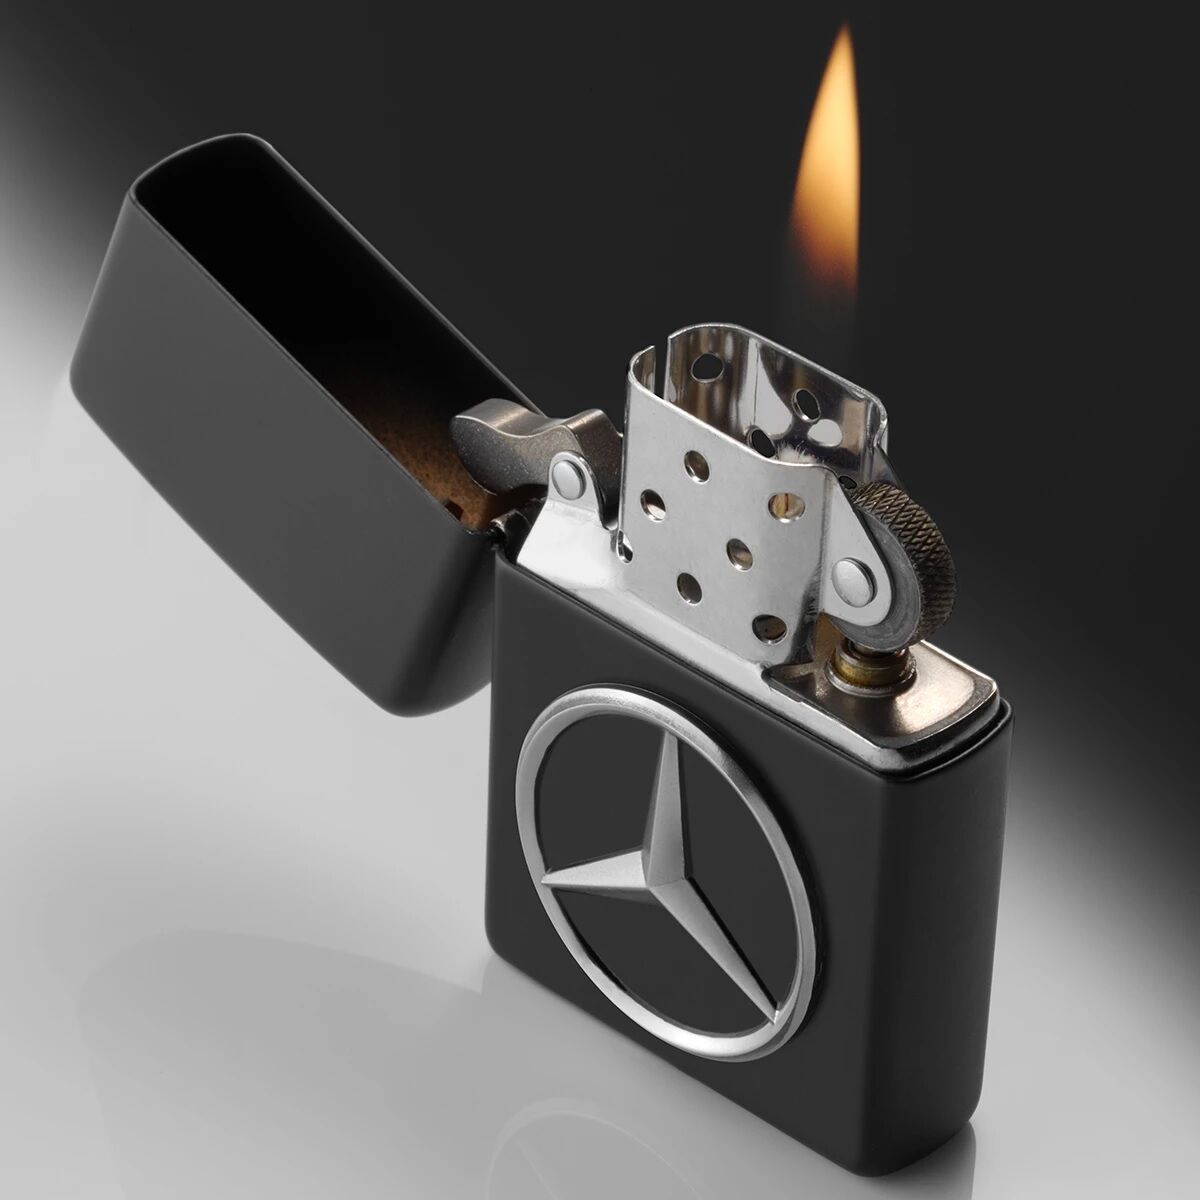 Buy Mercedes Benz Lighter from Autohangar India